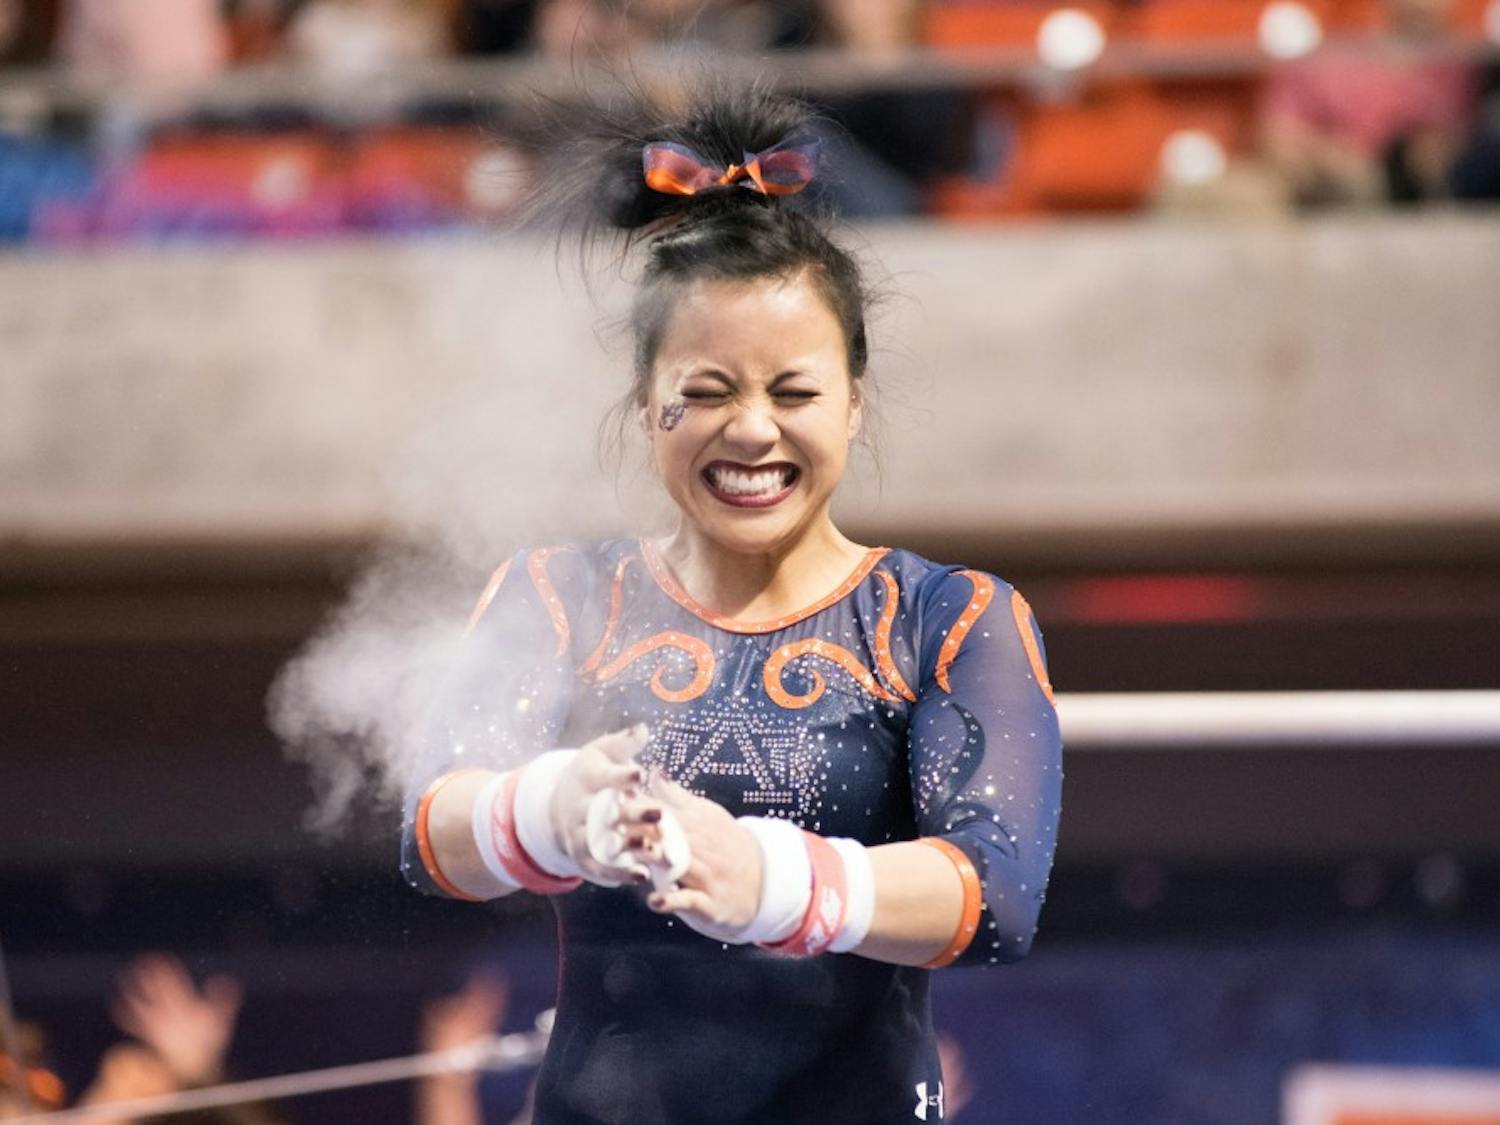 Samantha Cerio reacts after her uneven bars routine&nbsp;at Auburn Gymnastics vs. Kentucky at Auburn Arena in Auburn, Ala. on Friday, Jan. 26, 2018.